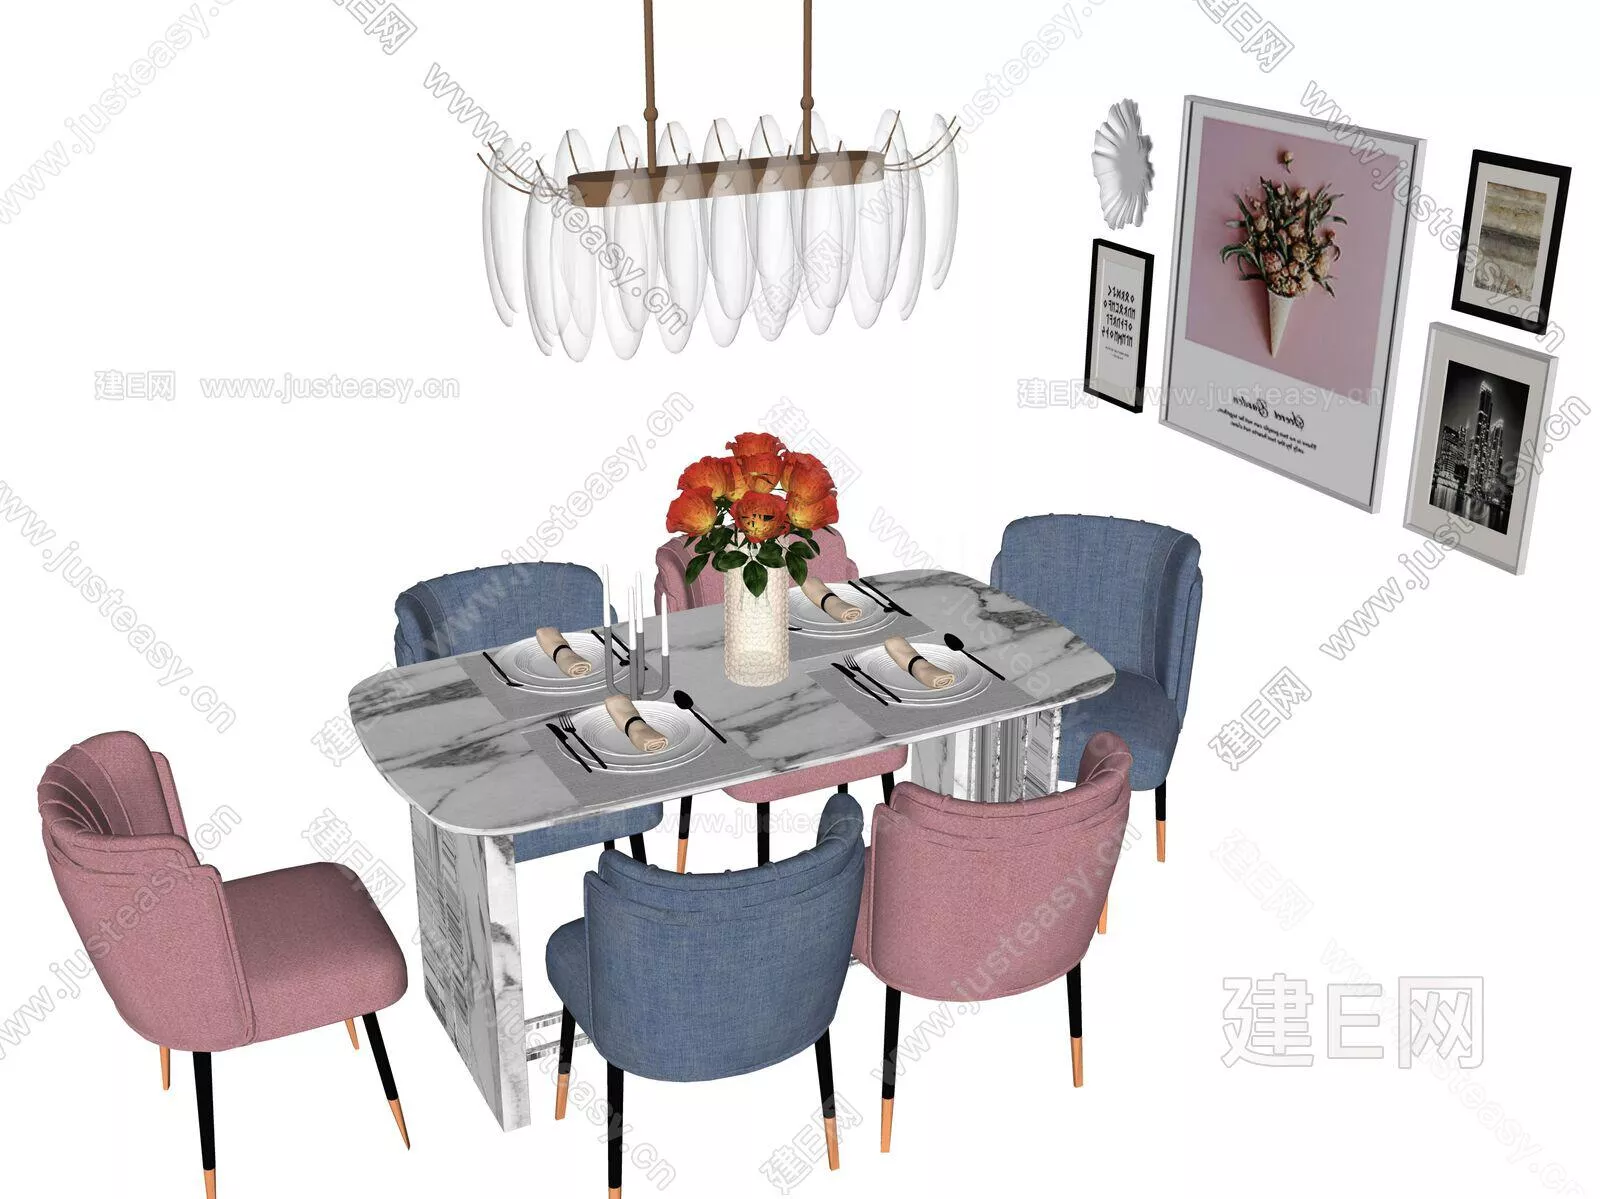 AMERICAN DINING TABLE SET - SKETCHUP 3D MODEL - ENSCAPE - 111886593